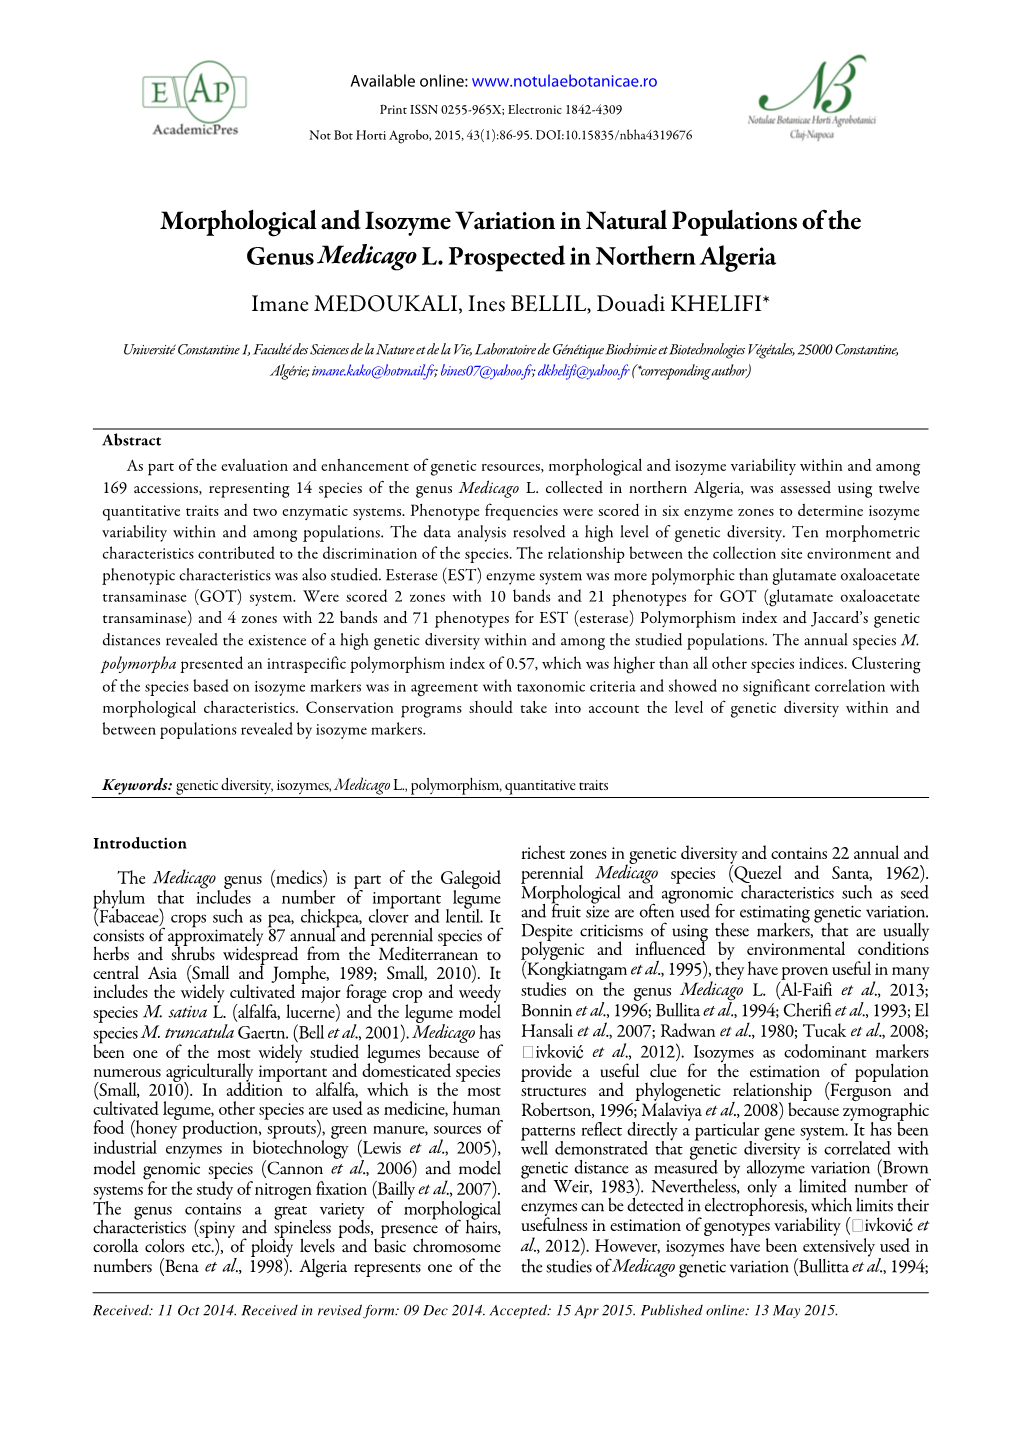 Morphological and Isozyme Variation in Natural Populations of the Genus Medicago L. Prospected in Northern Algeria Imane MEDOUKALI, Ines BELLIL, Douadi KHELIFI*